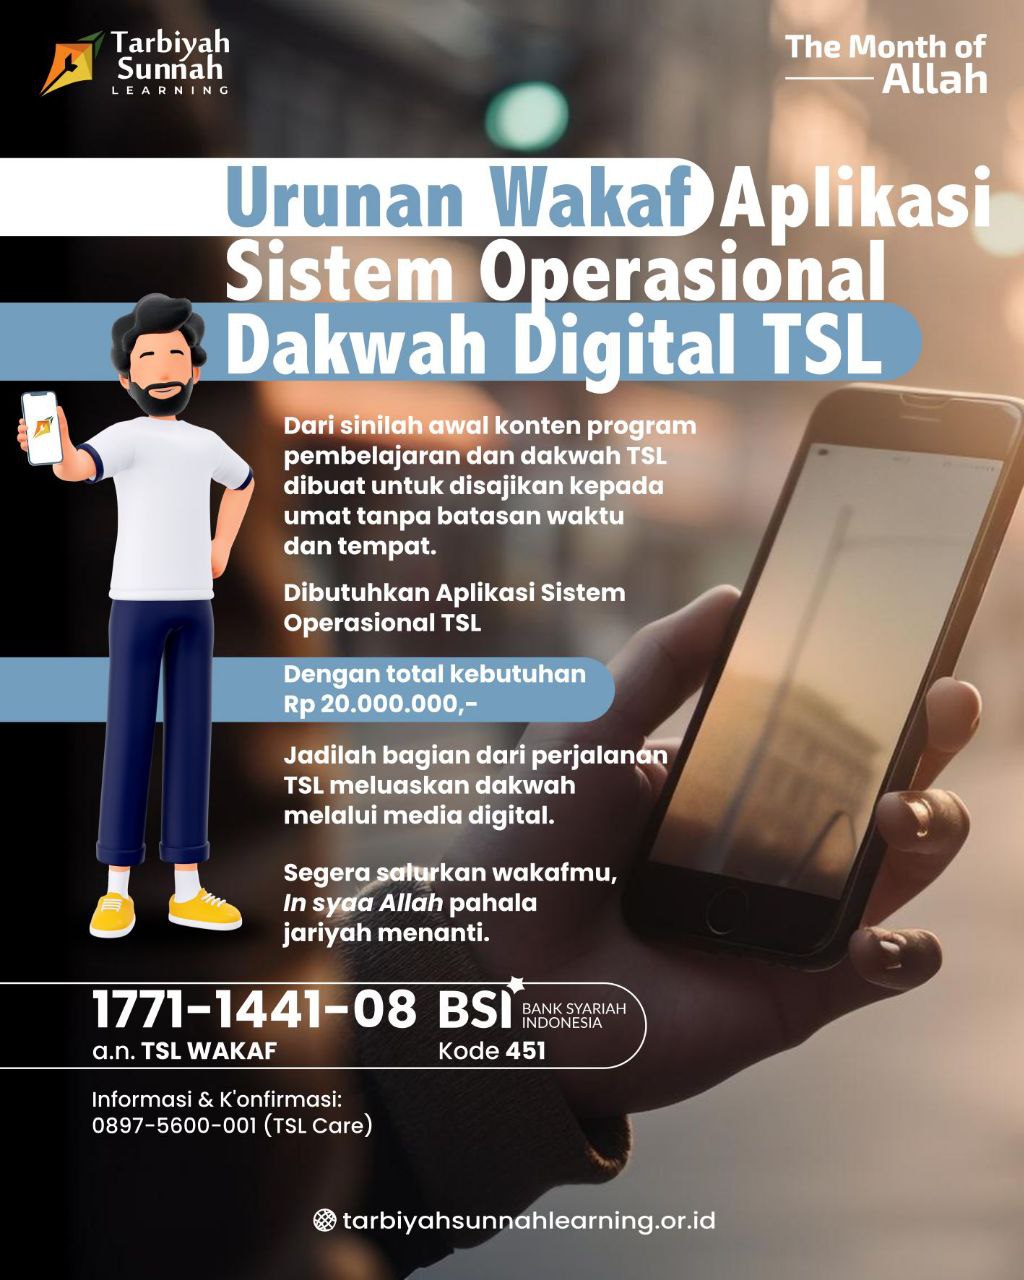 Urunan Wakaf Aplikasi Sistem Operasional Dakwah Digital TSL